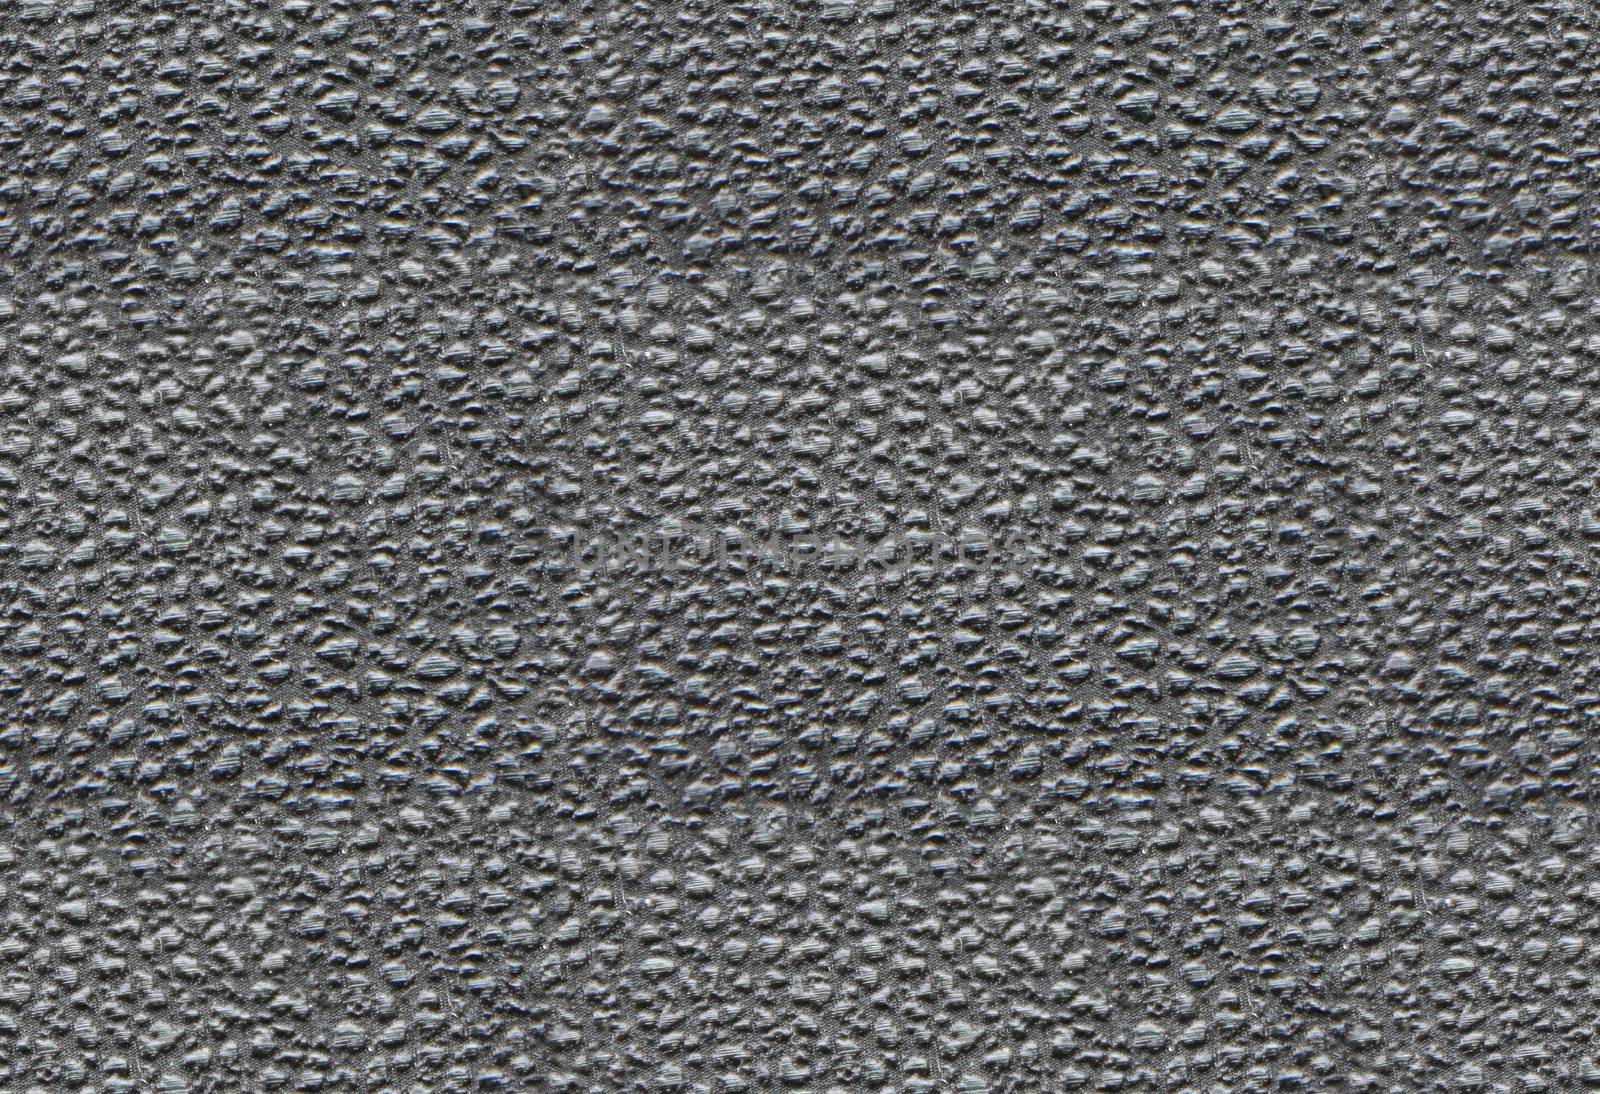 Artificial leather tiled texture by destillat